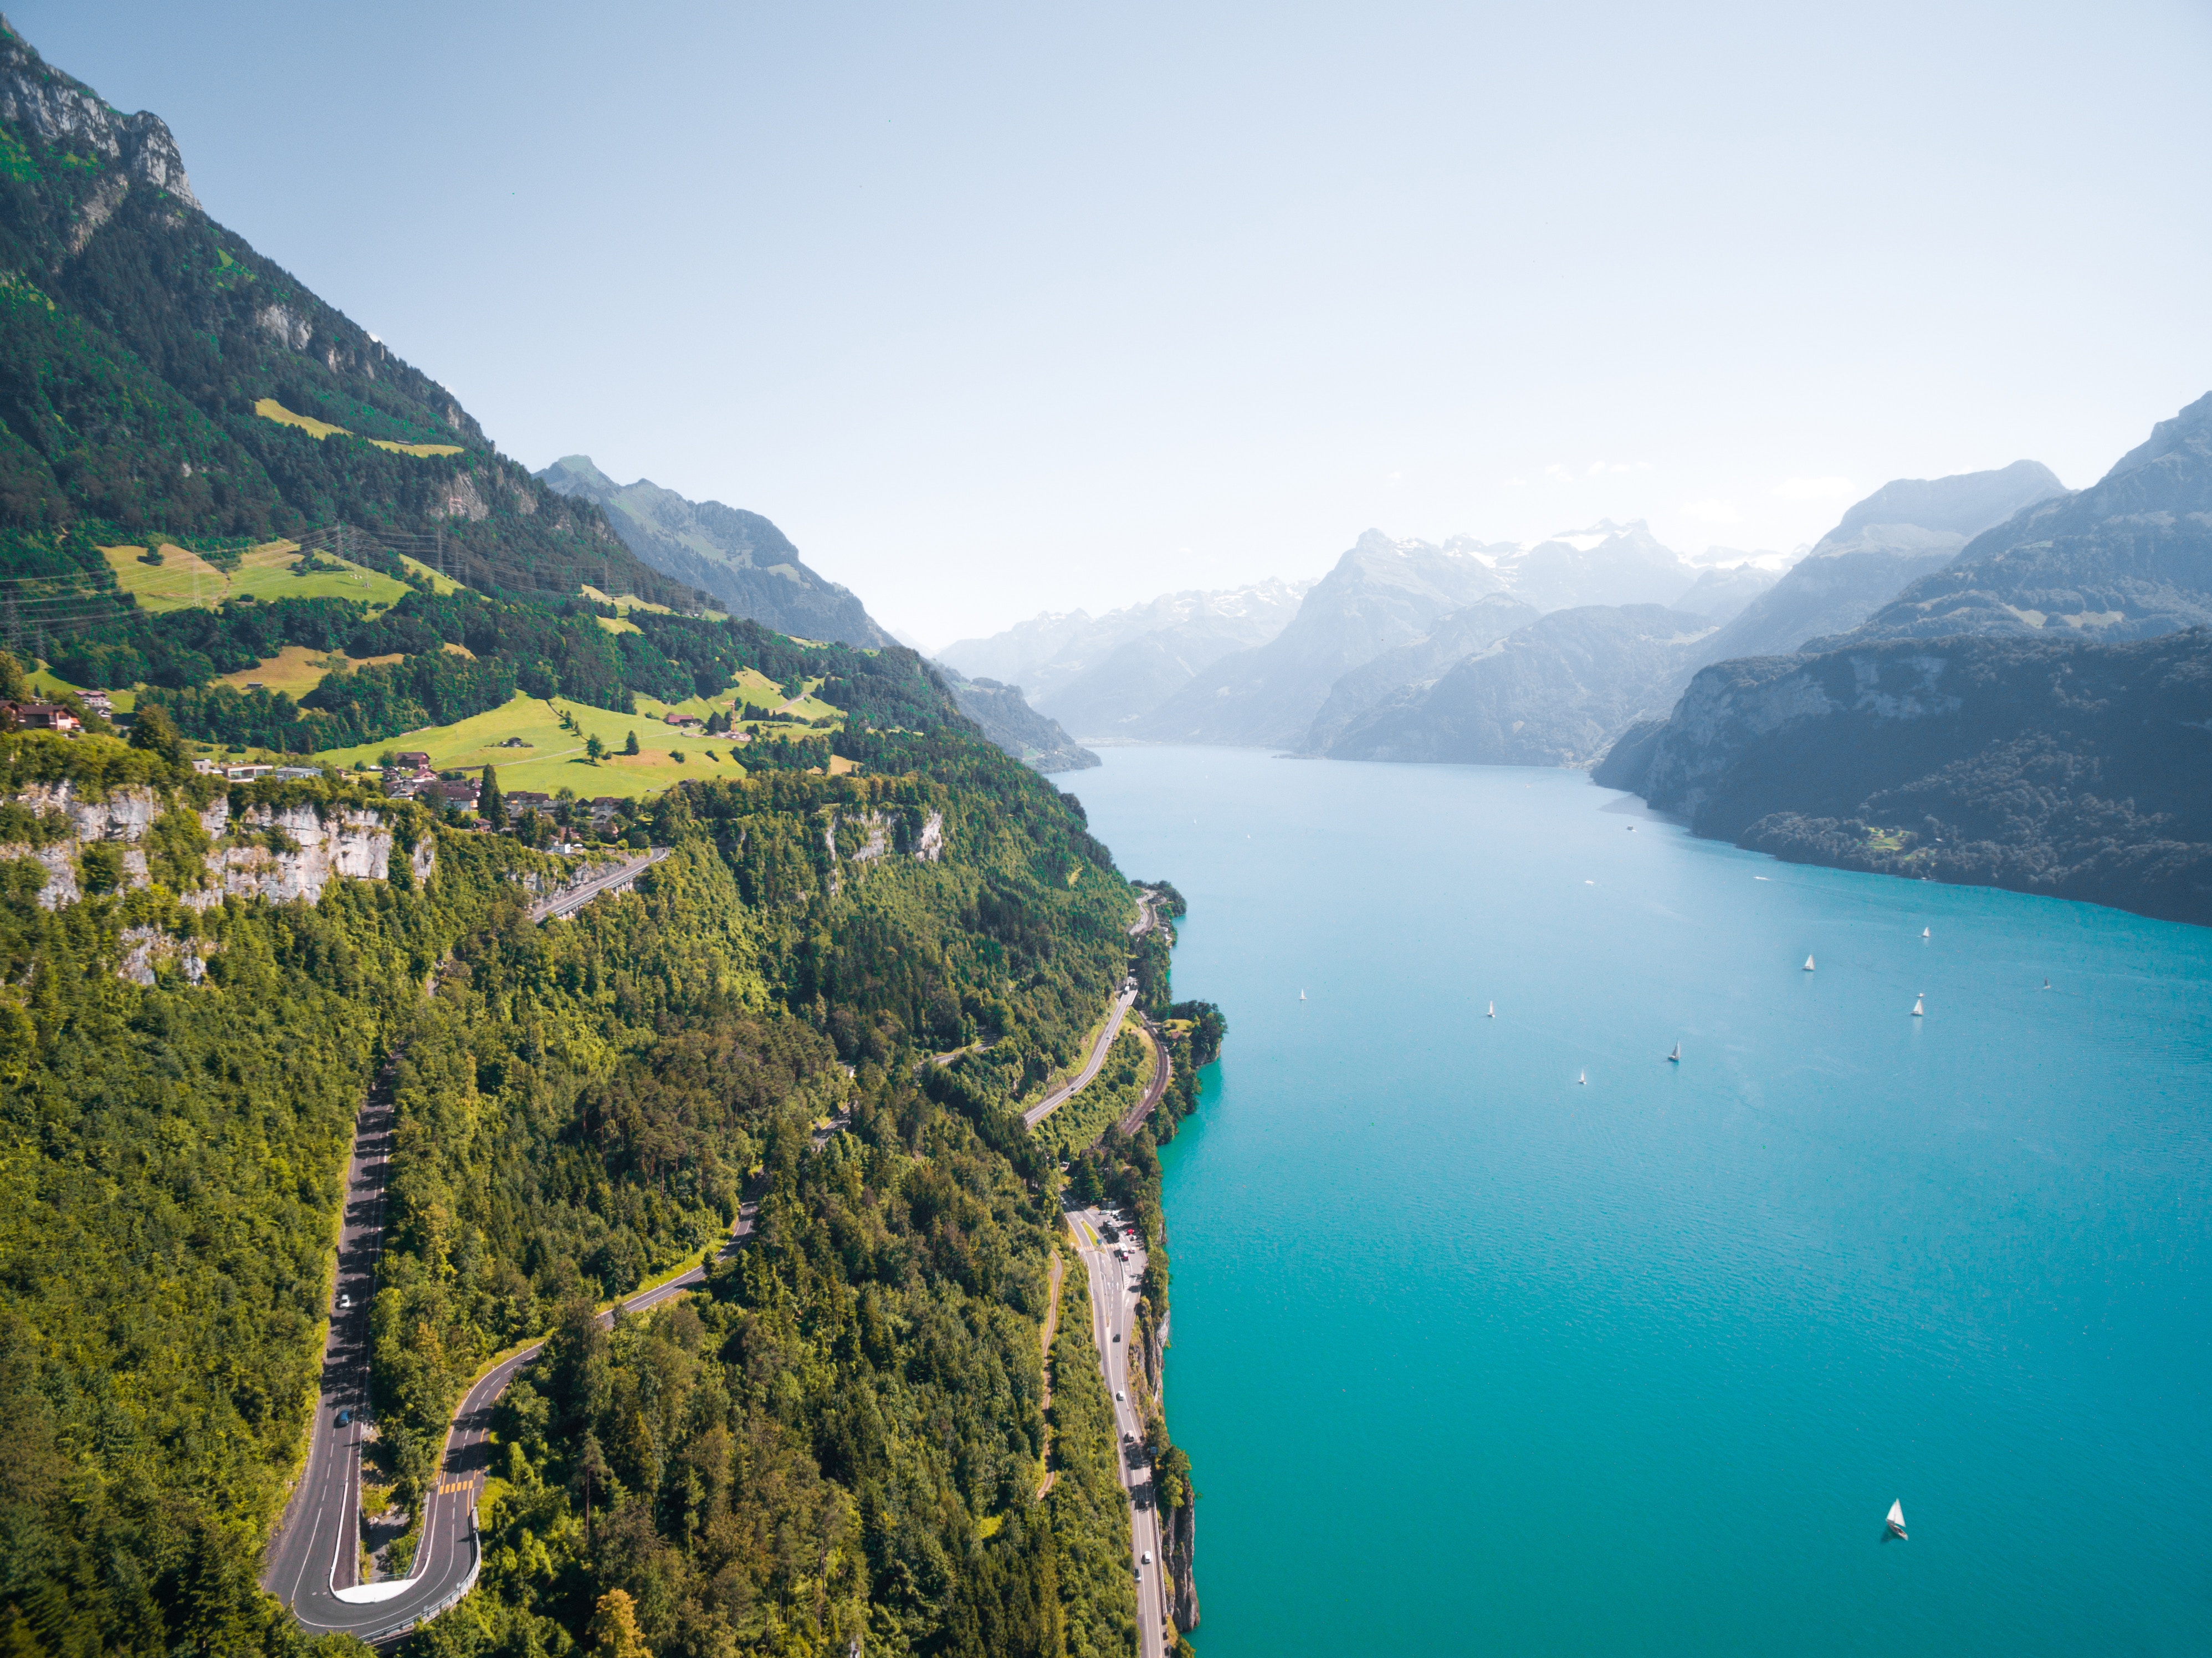 Wallpapers landscape nature Switzerland on the desktop